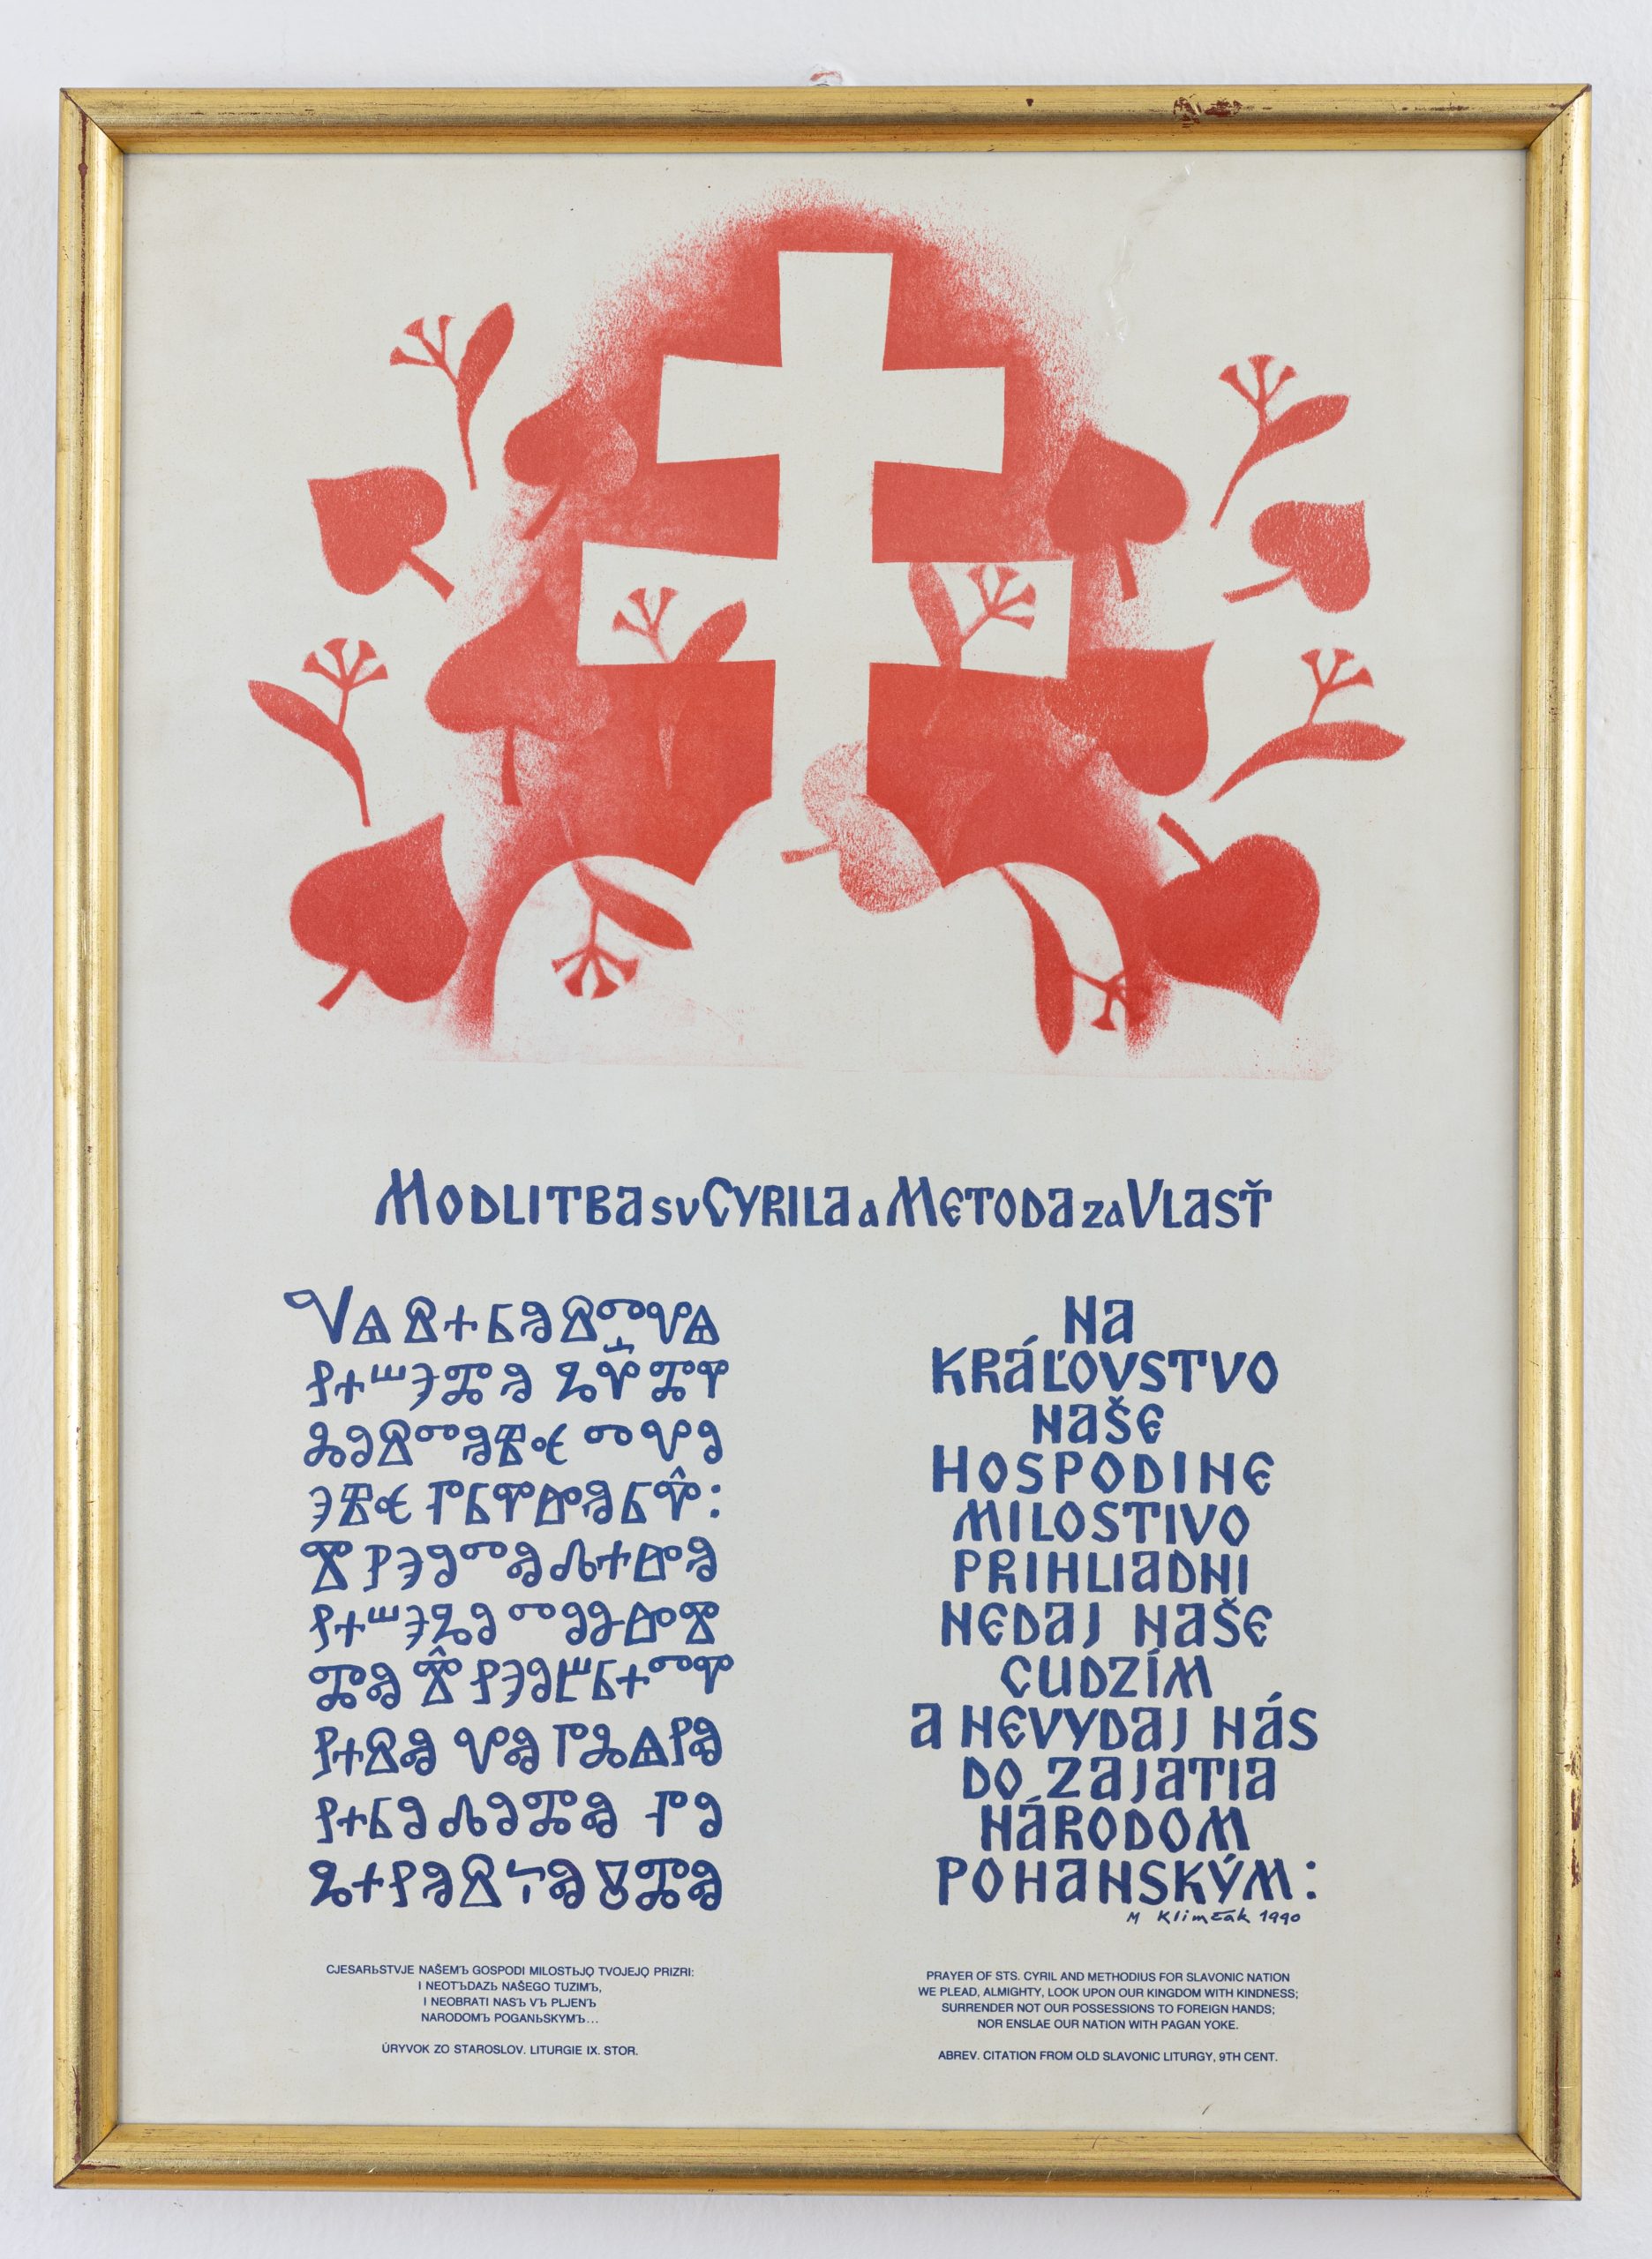 Mikuláš Klimčák - Modlitba sv. Cyrlia a Metoda za vlasť 1990 (kombinovaná technika, 69x51)